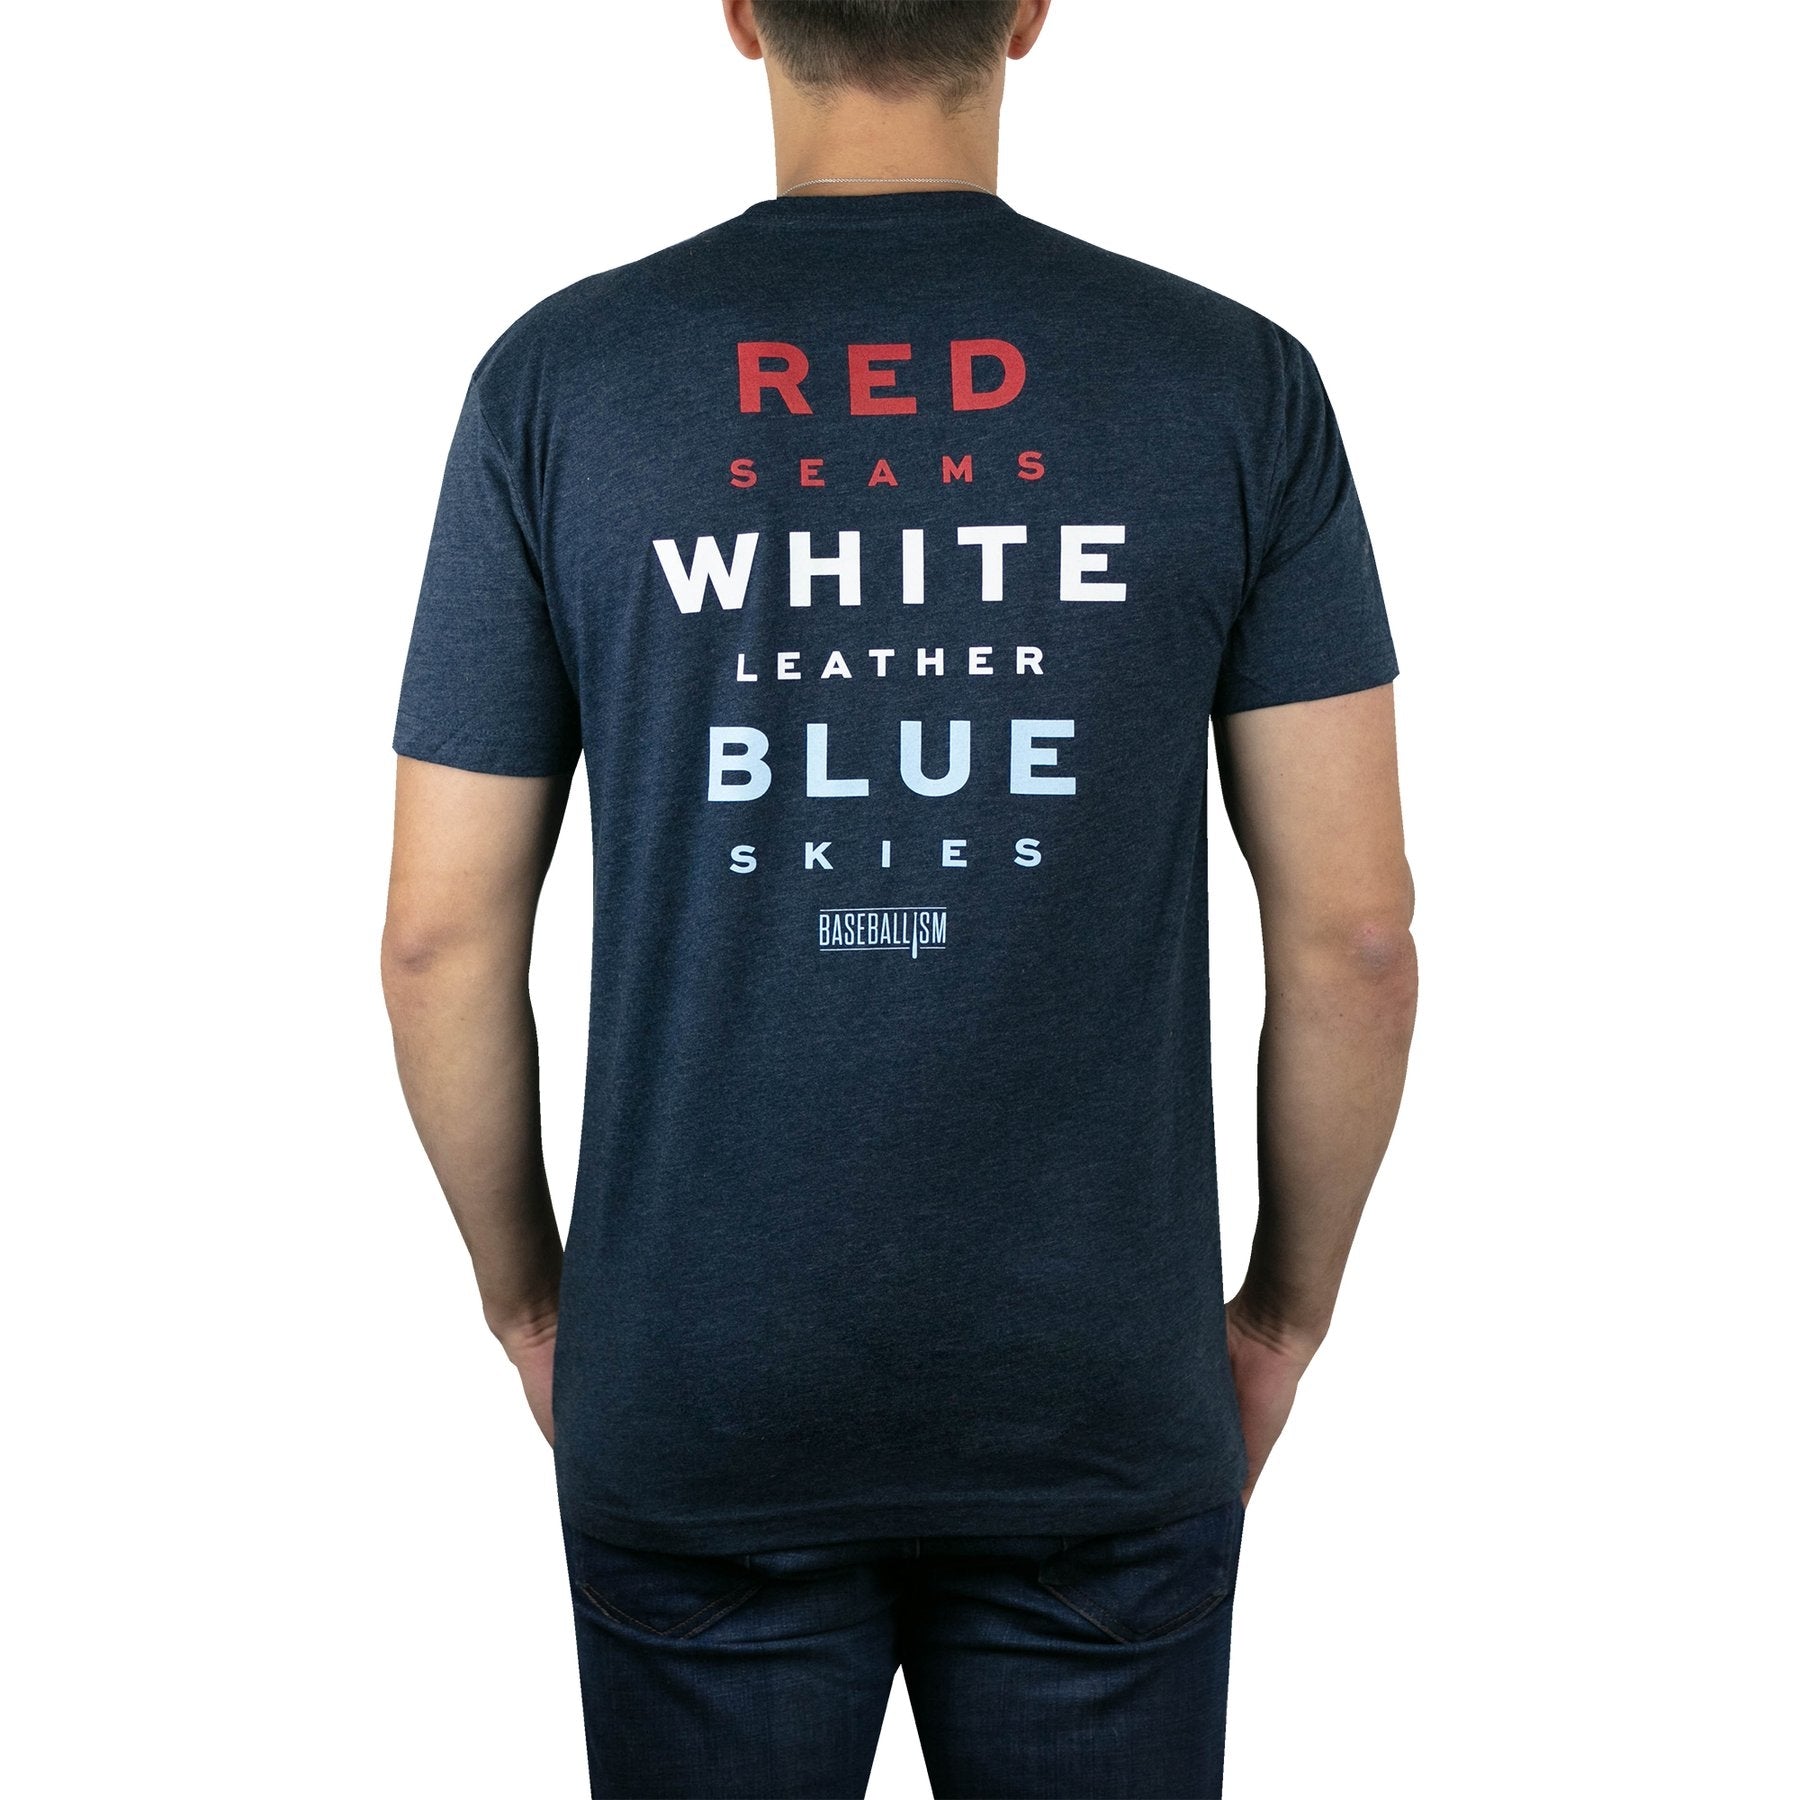 Baseballism - Home Team - Red, White and Blue T-Shirt (Men's)